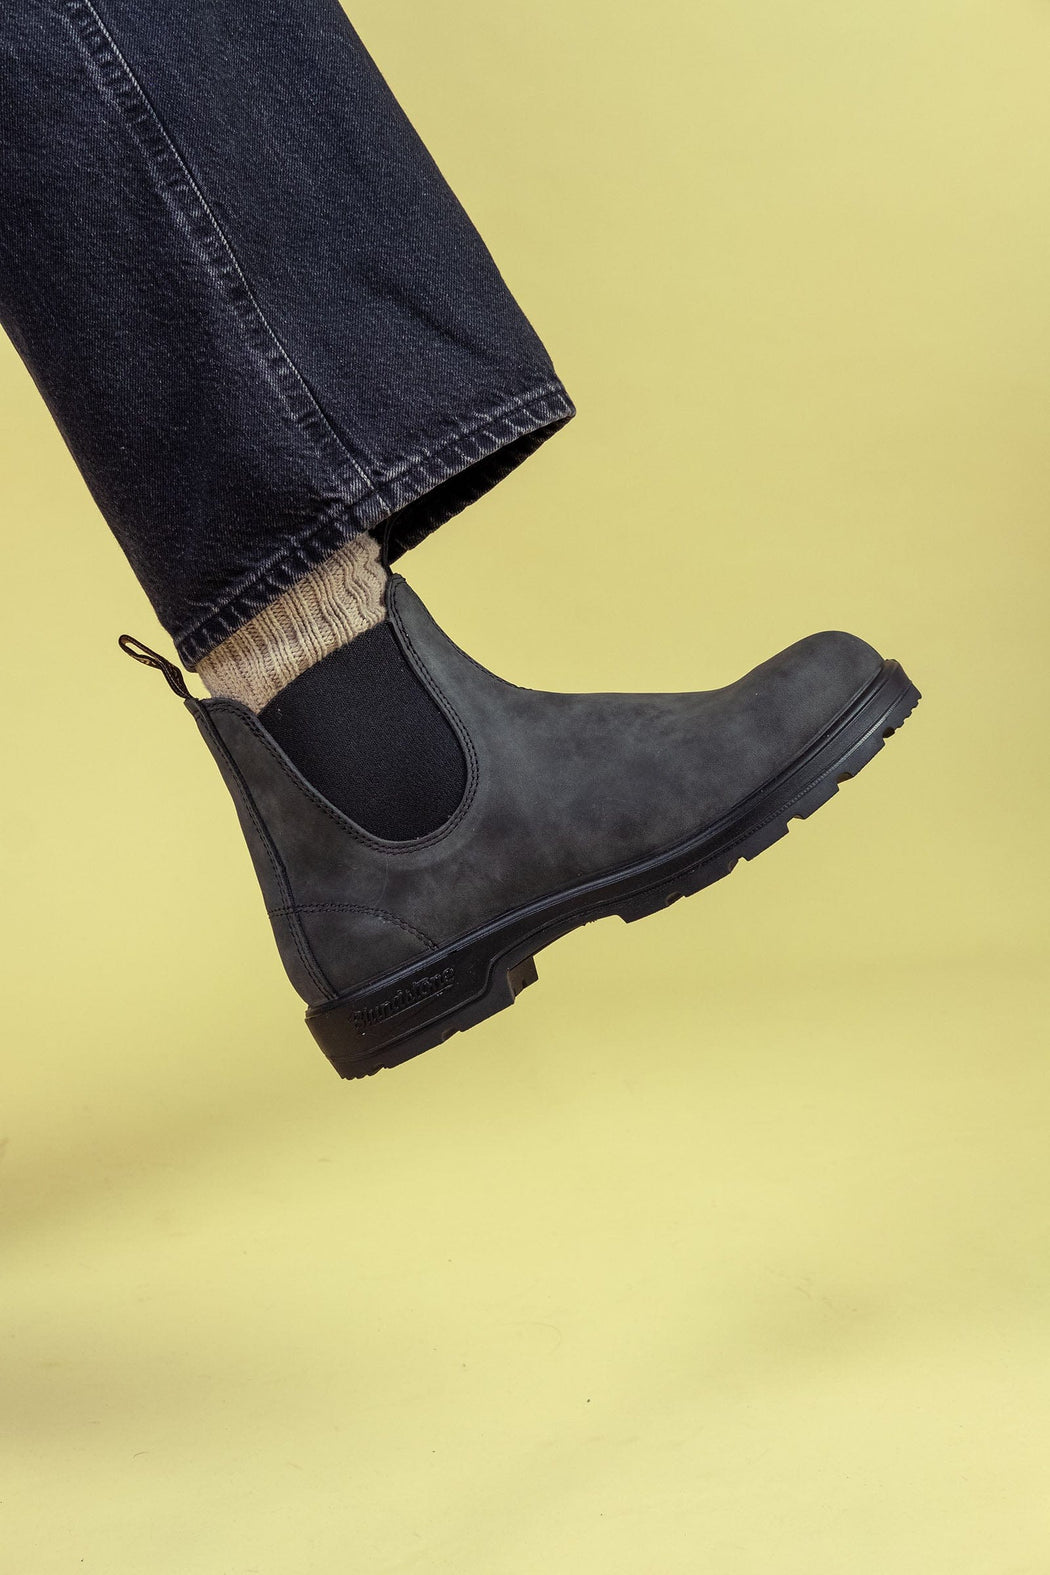 Blundstone 587 Chelsea Boot - Rustic Black BOOTS  - ZIGZAG Footwear